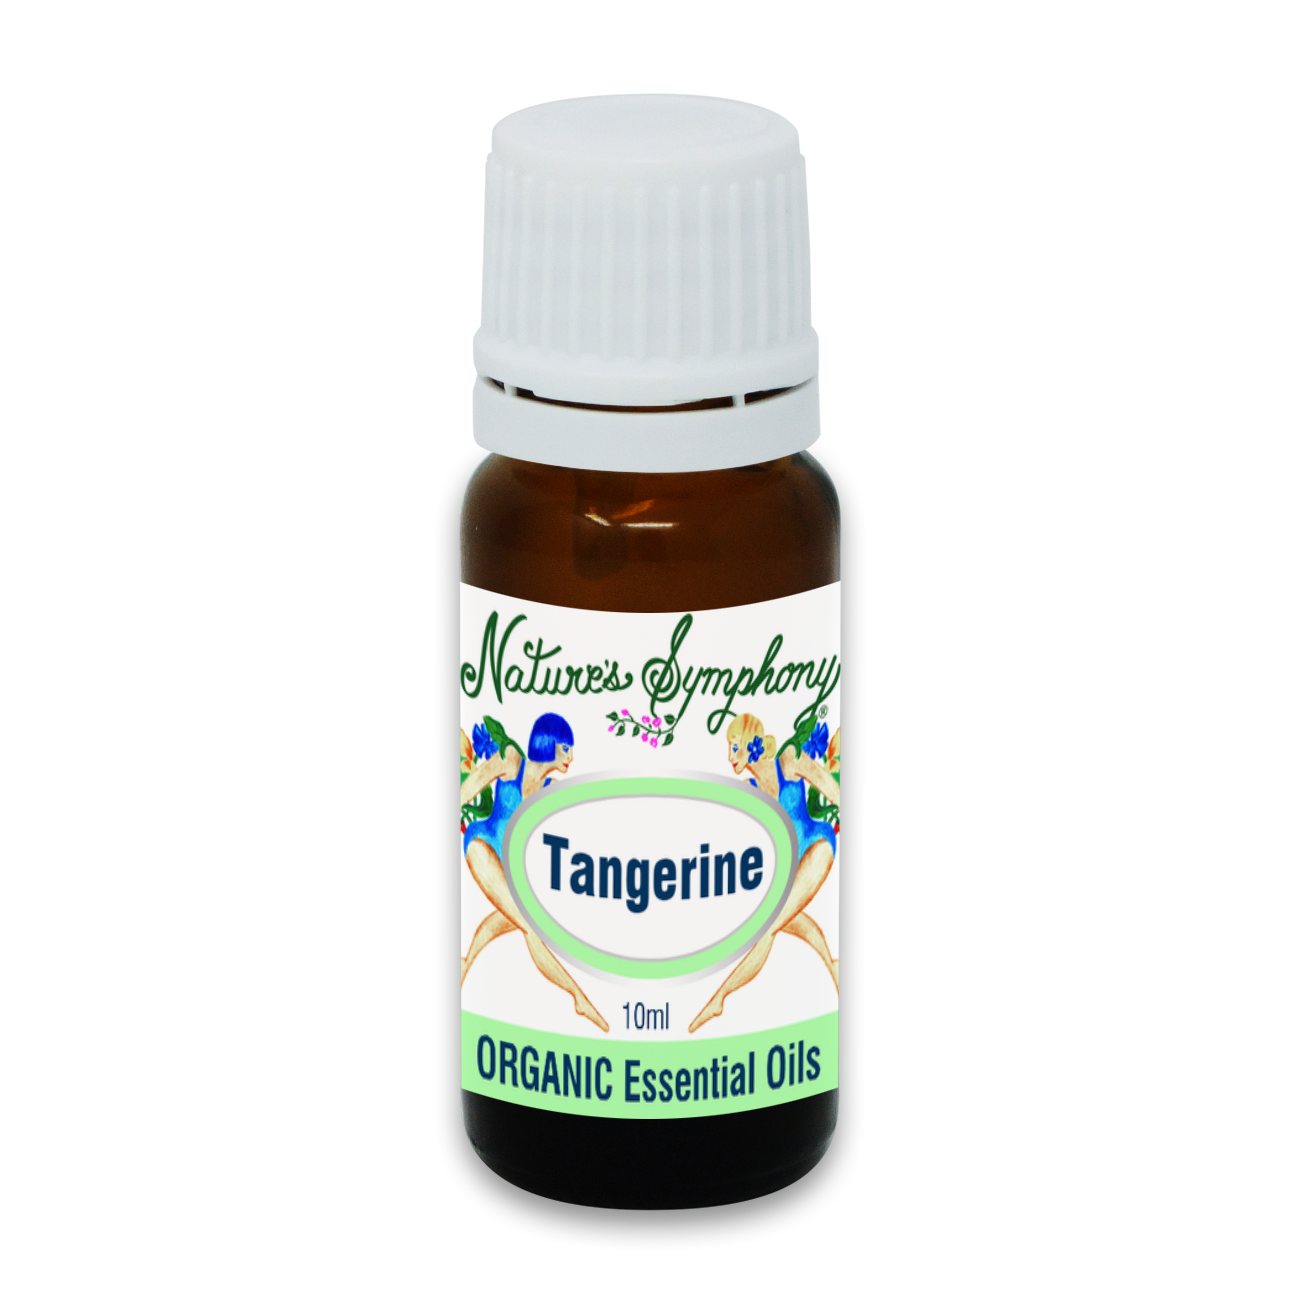 Tangerine, Organic/Wildcrafted oil - 10ml